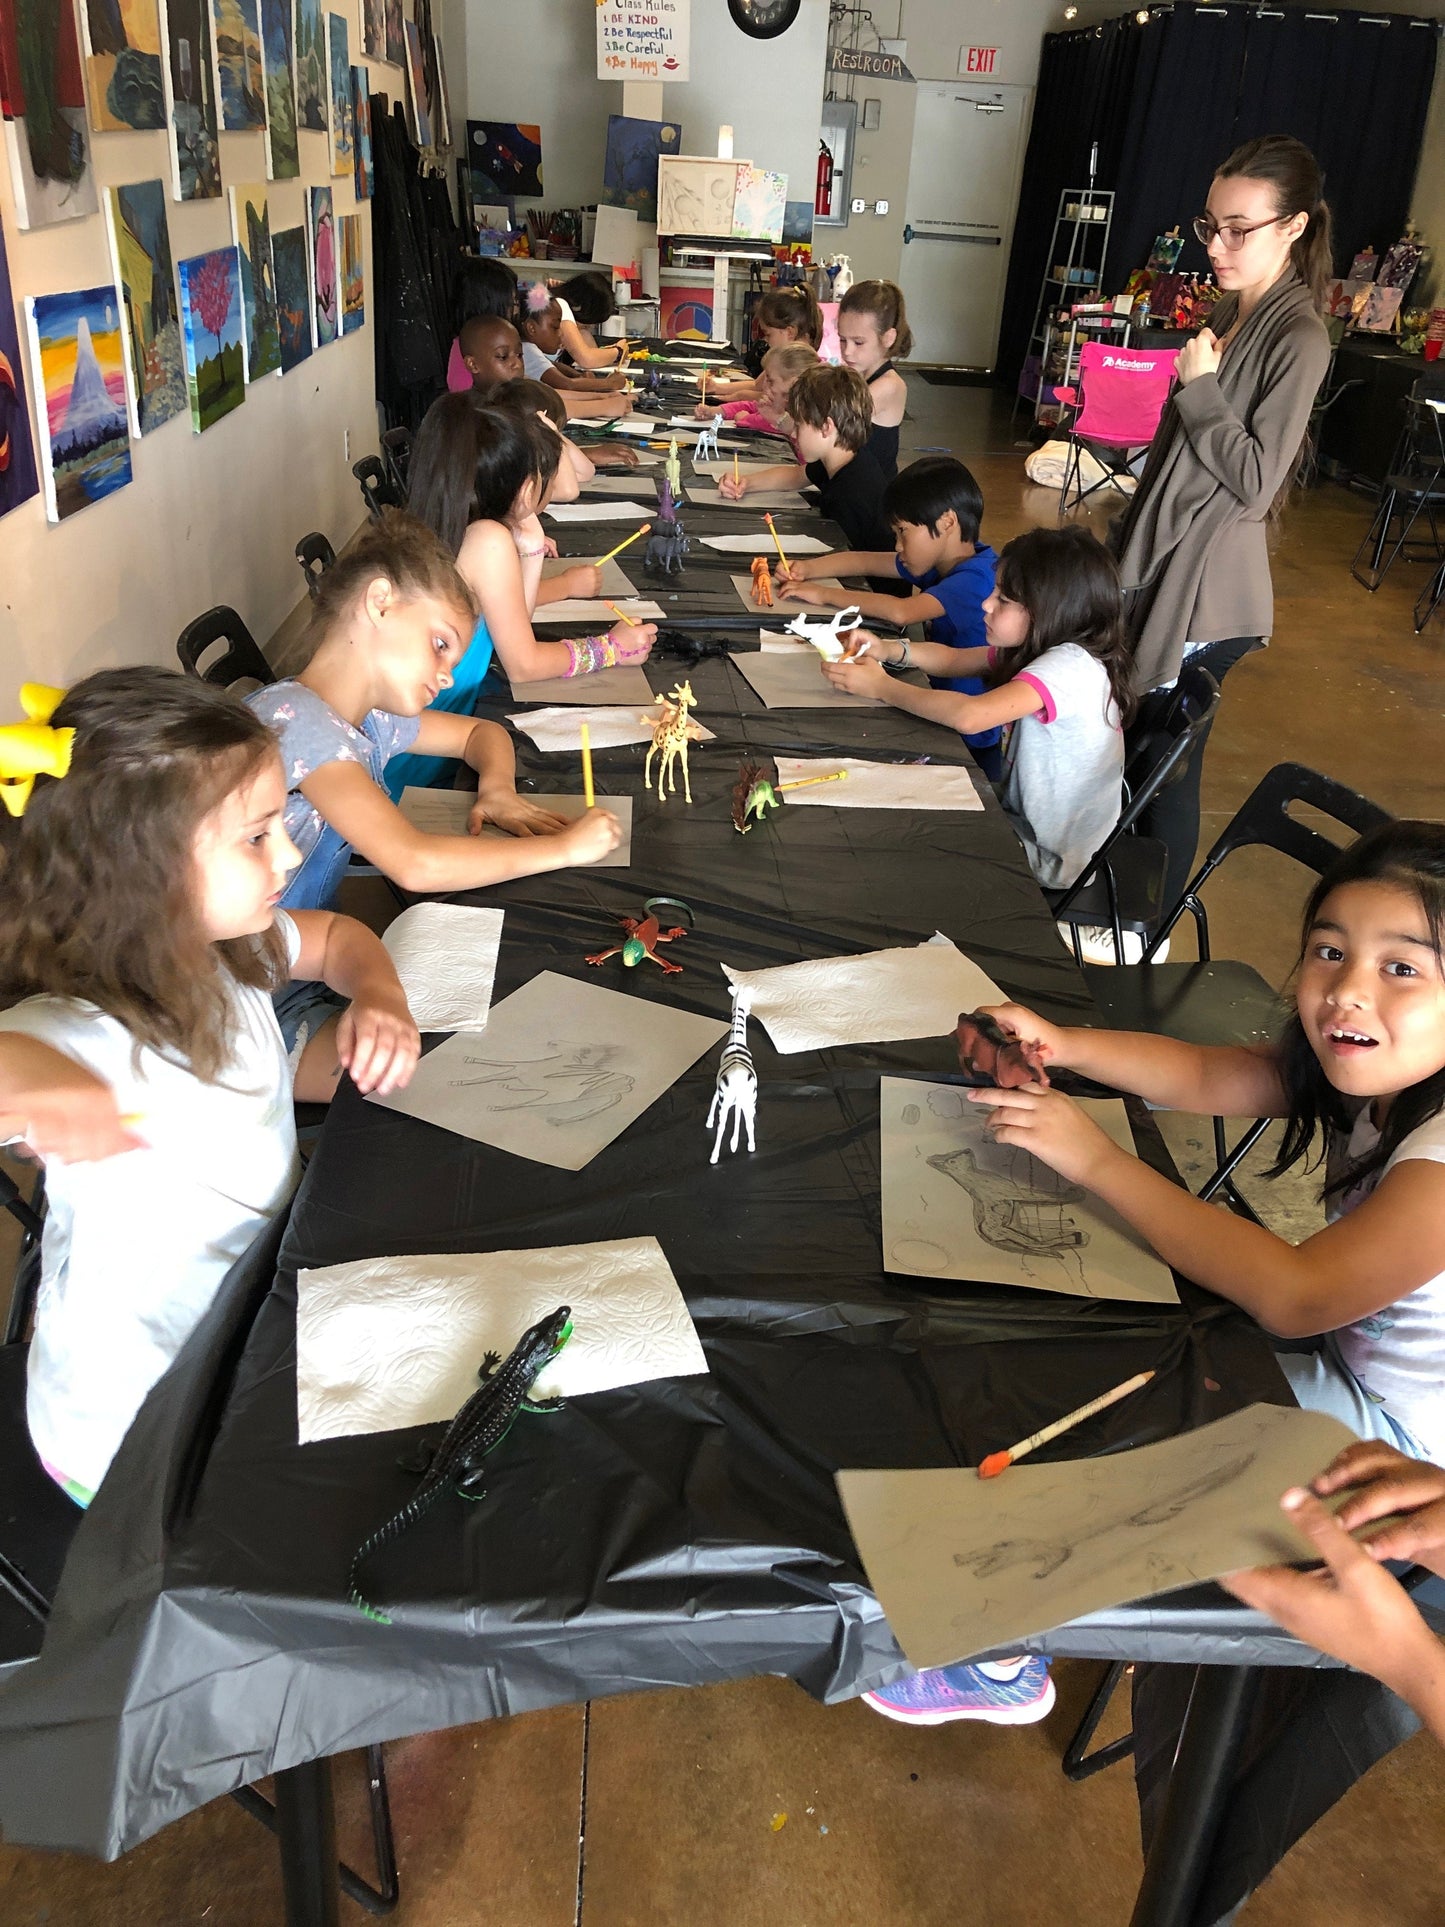 Wed, Mar 2nd, 4-6P  “Sketch Basics” Public Houston Kids Art Class